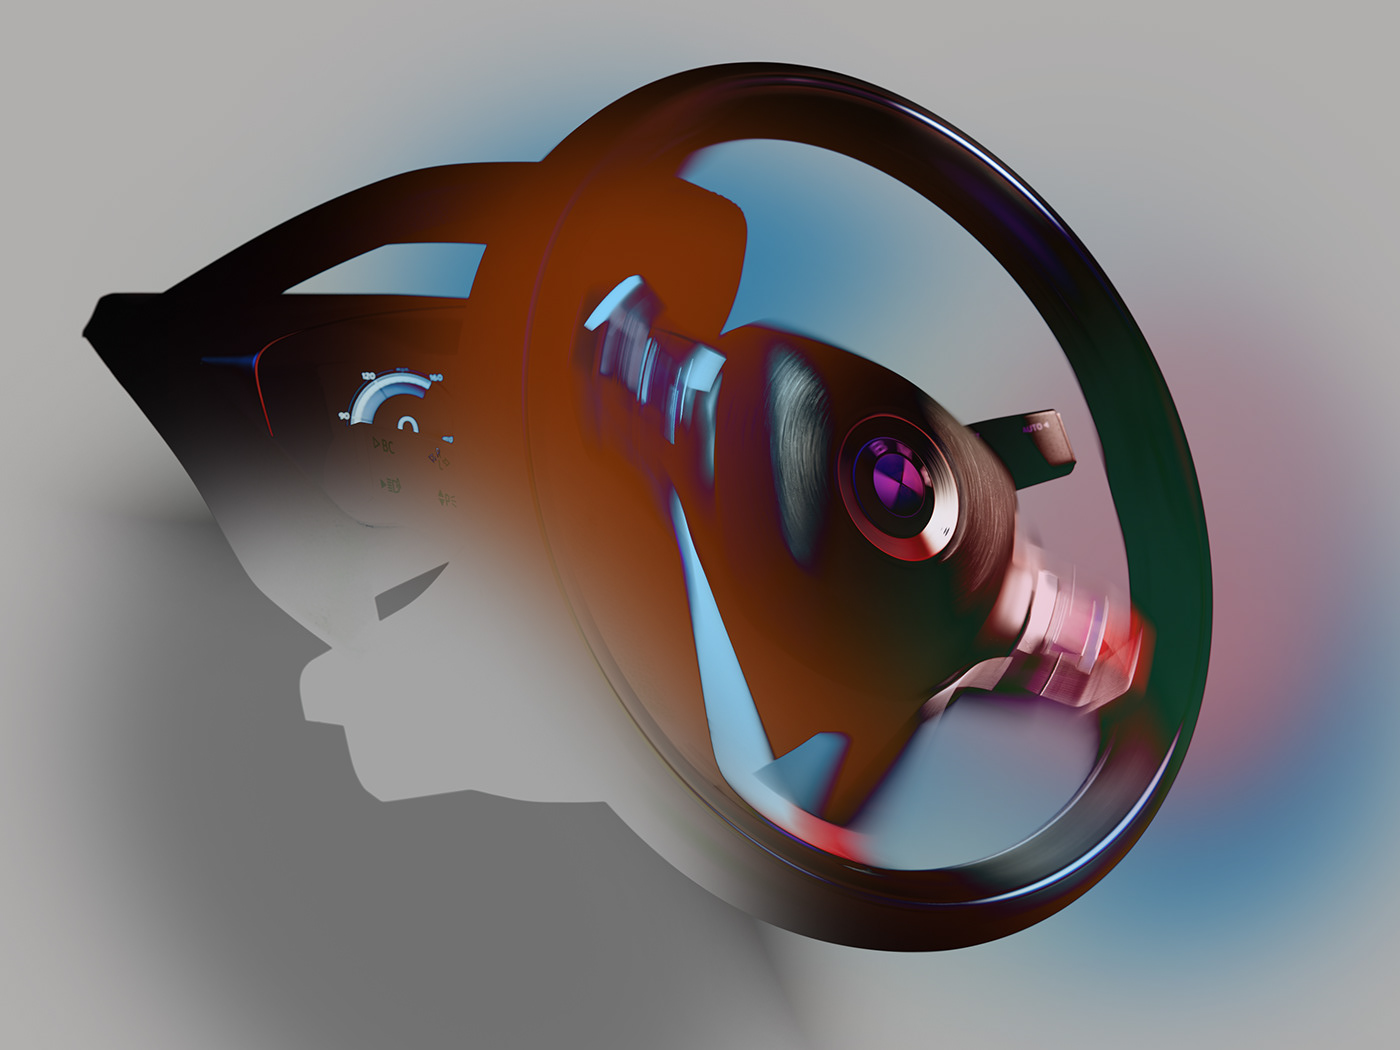 BMW BMW i8 steering wheel volante product visualization rendering exploration CGI I8 photorealism